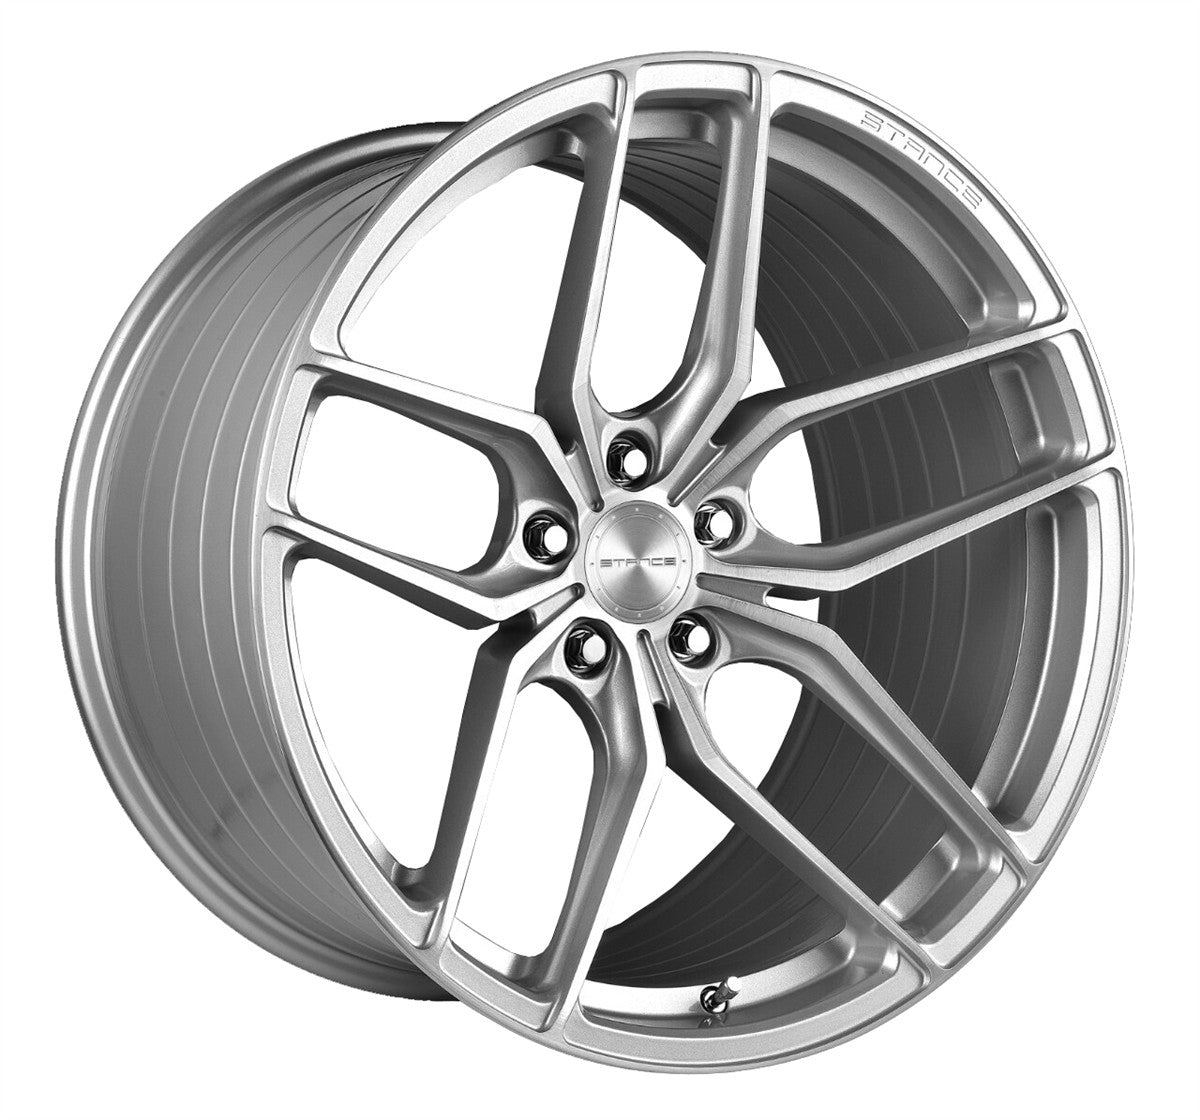 20” Stance SF03 Brush Silver Concave Wheels - Set of 4 - Motorsports LA